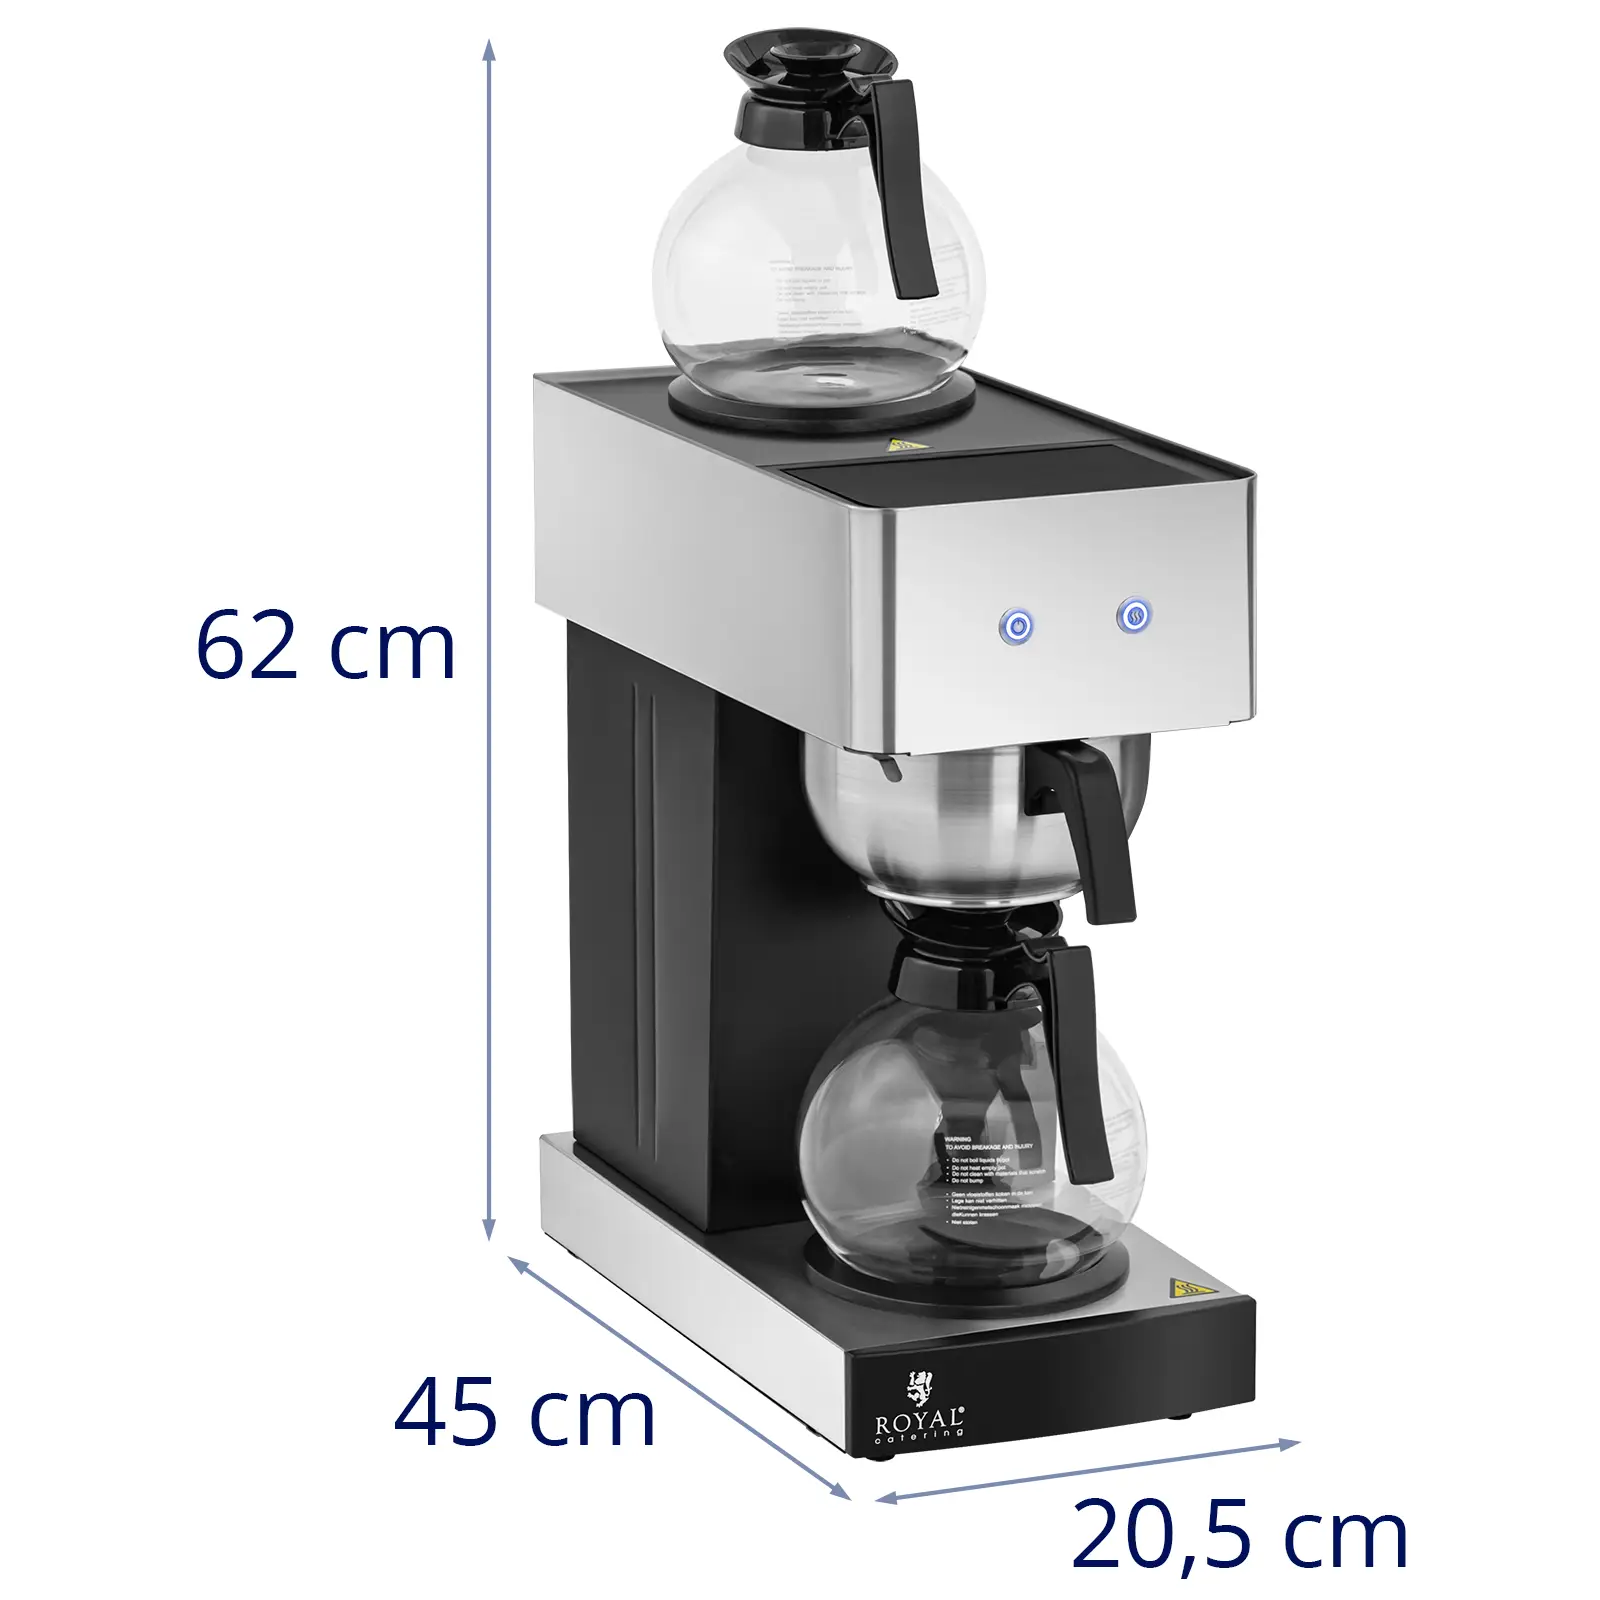 Filterkaffeemaschine - 2 x 1,8 L - 2 Wärmplatten - inkl. 2 Glaskannen